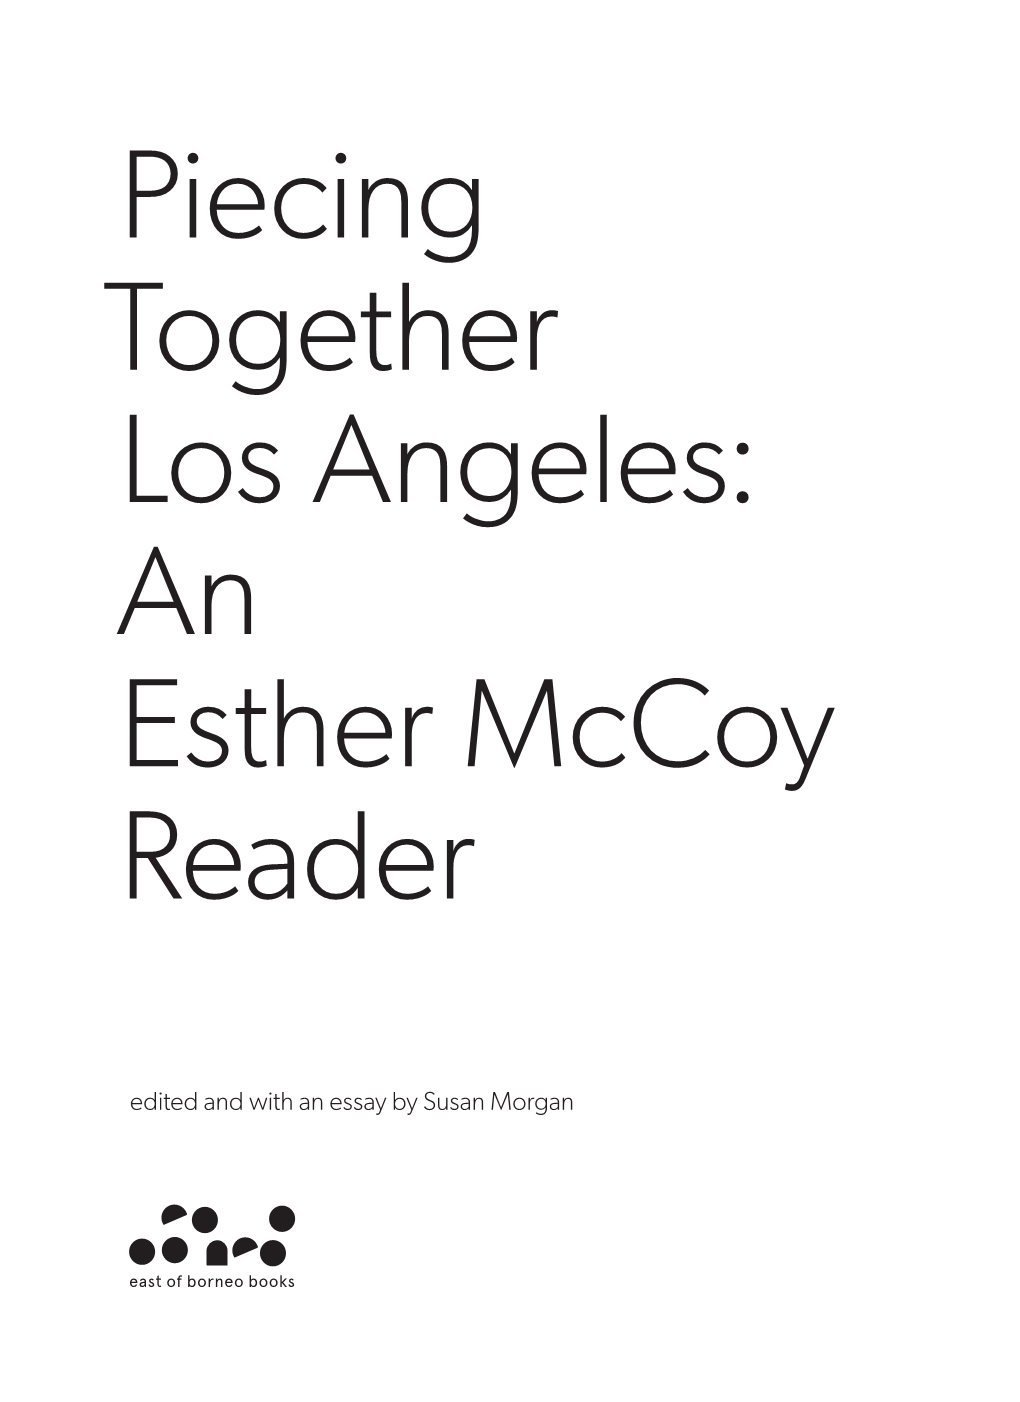 Piecing Together Los Angeles: an Esther Mccoy Reader